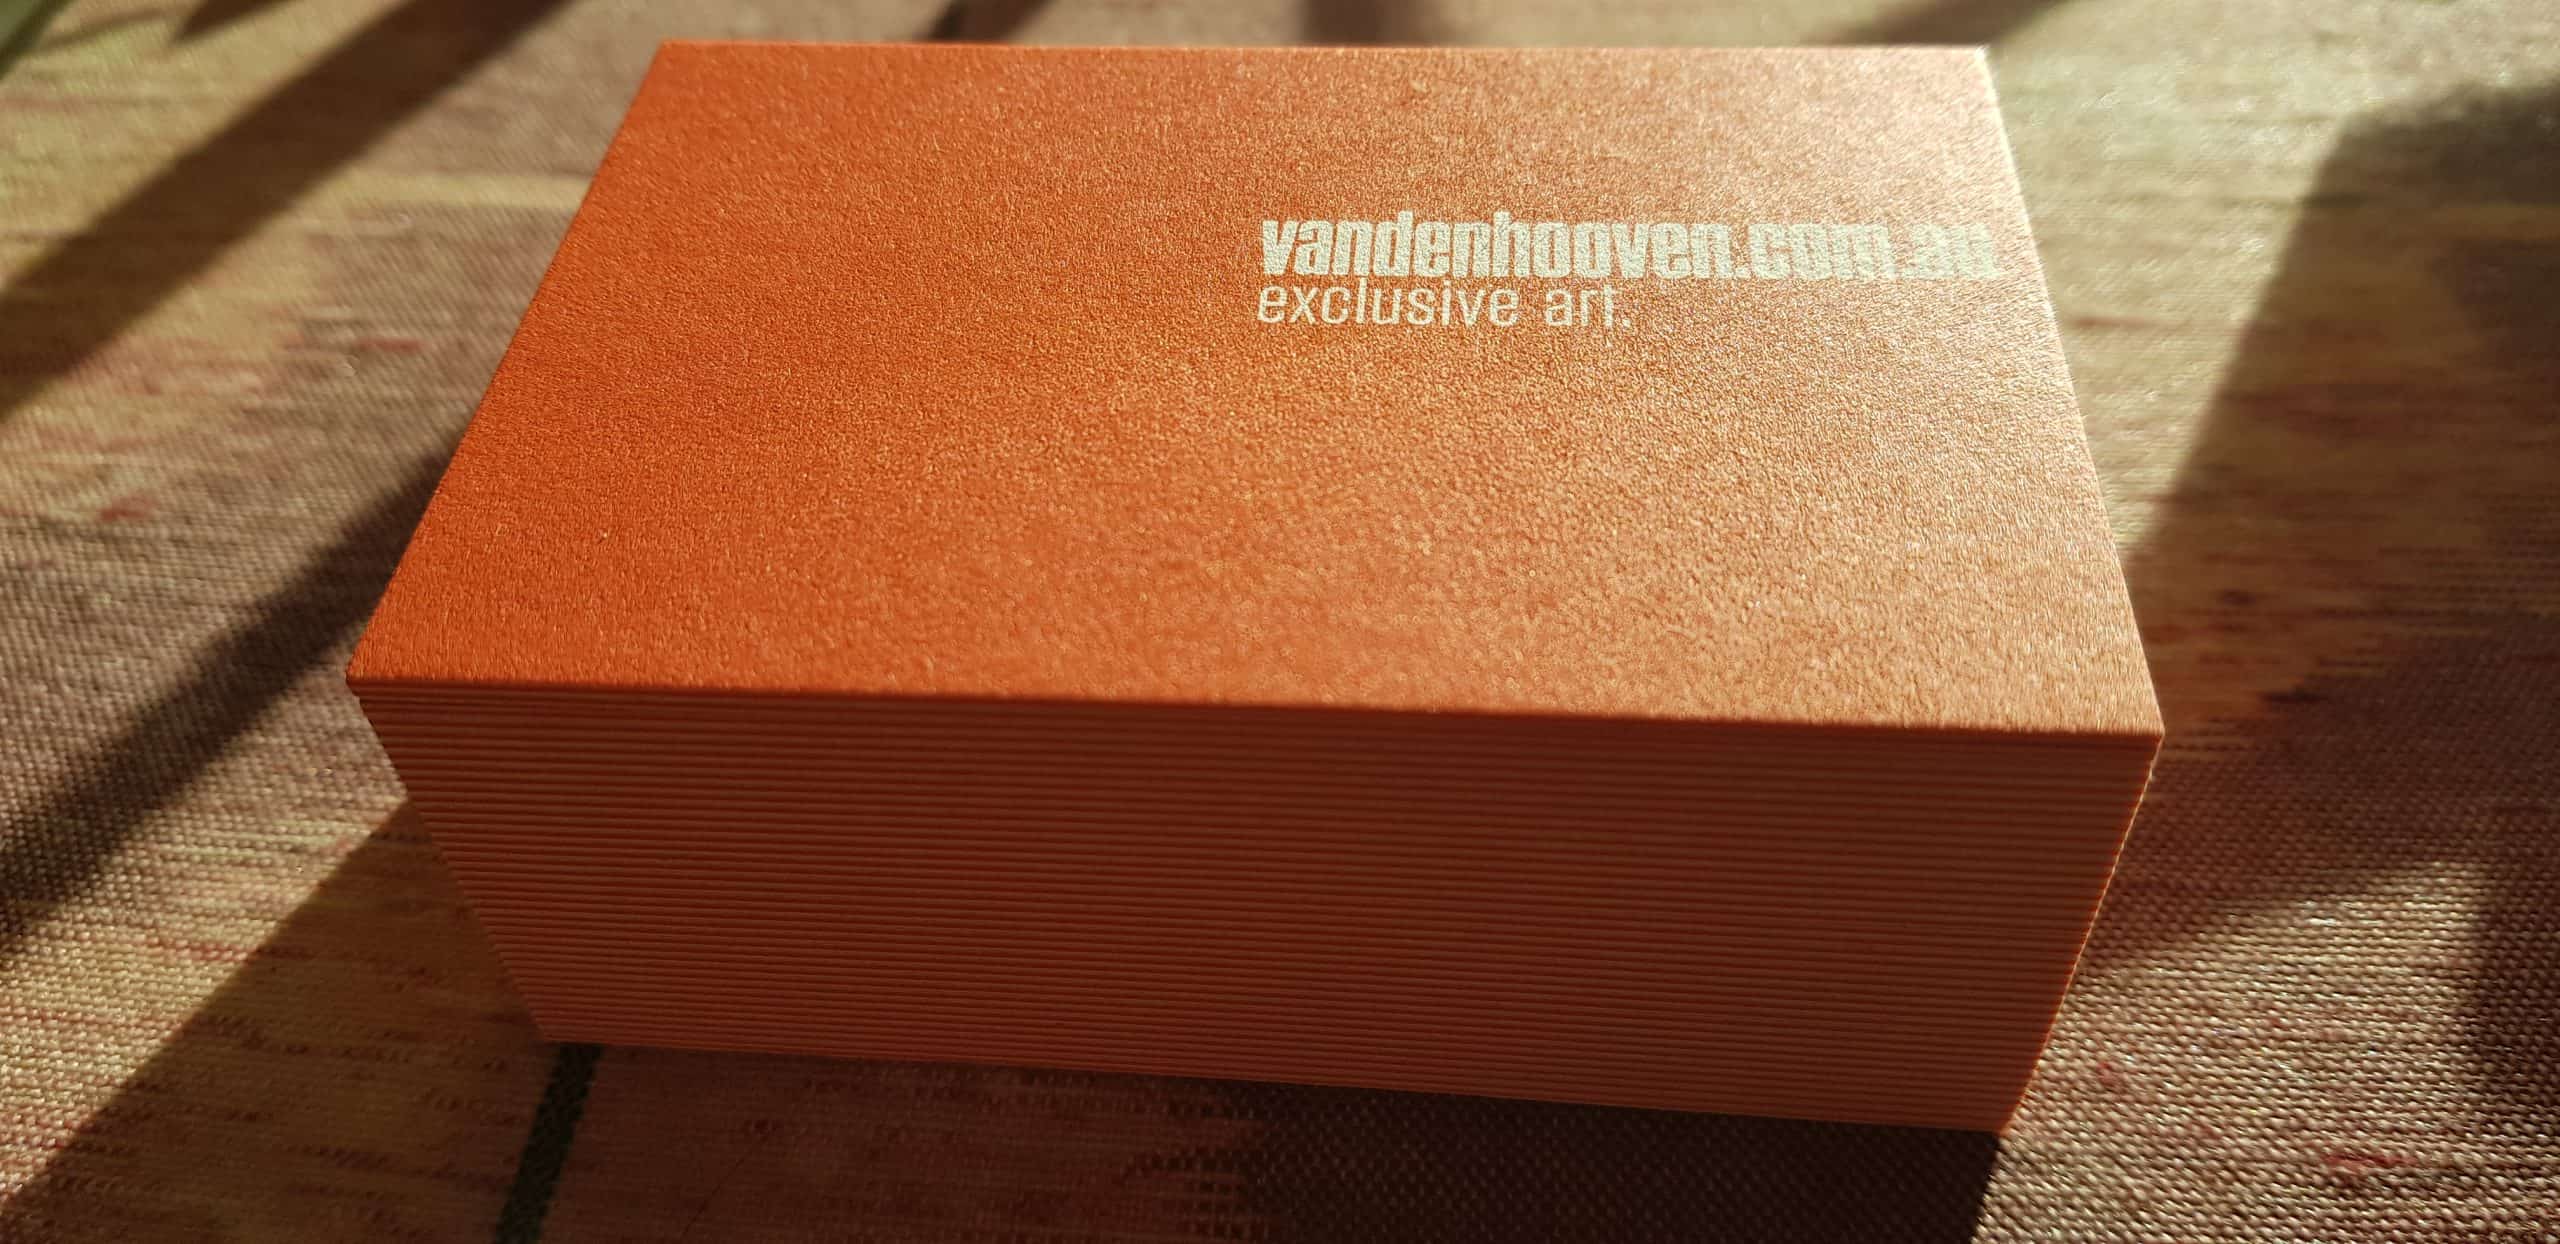 van den hooven business cards arrived yesterday!